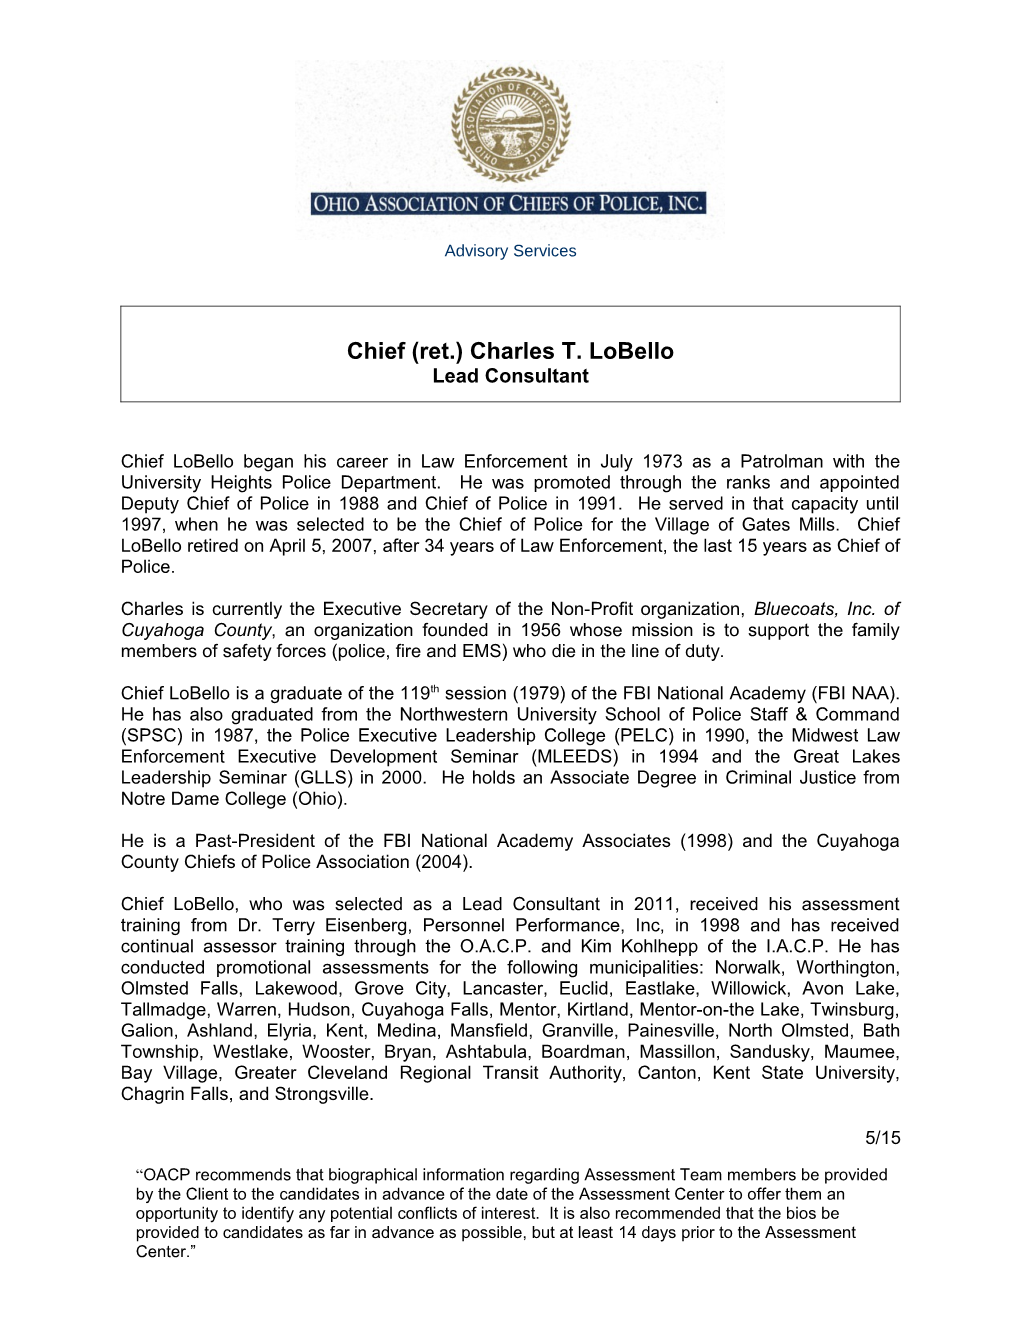 Chief (Ret.) Charles T. Lobello